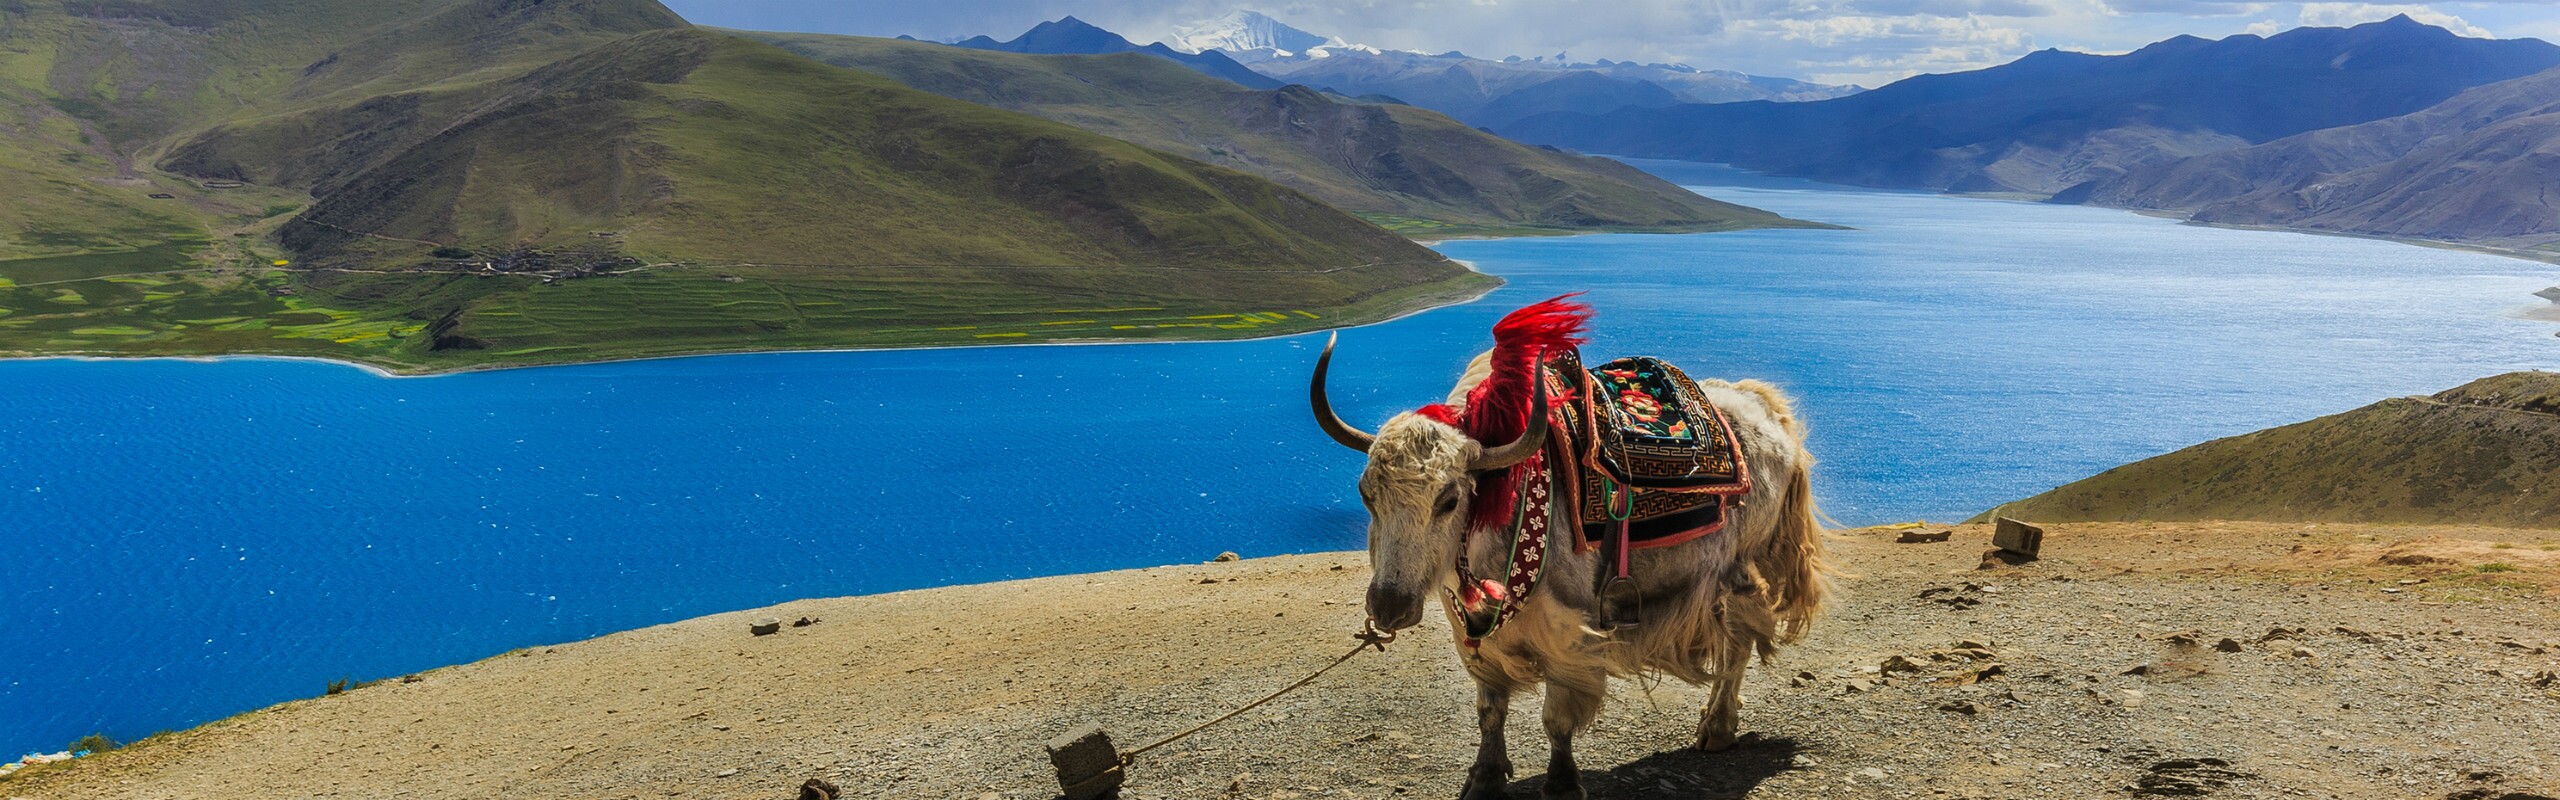 5-Day Lhasa Classics and Lake Yamdrok Tour